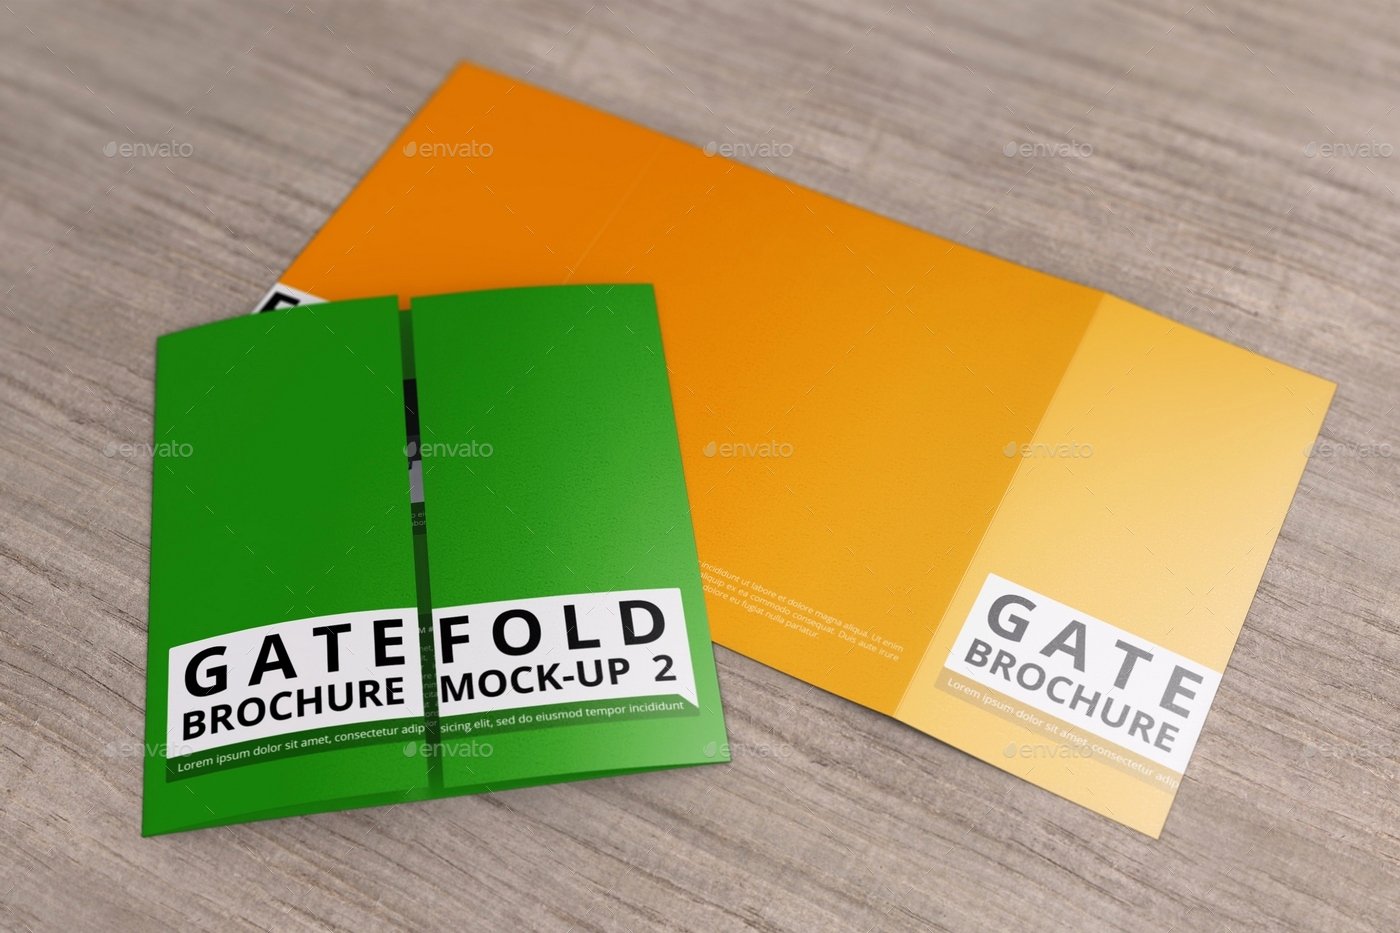 Single Fold Brochure Template Elegant Gatefold Brochure Mock Up 2 by Massdream